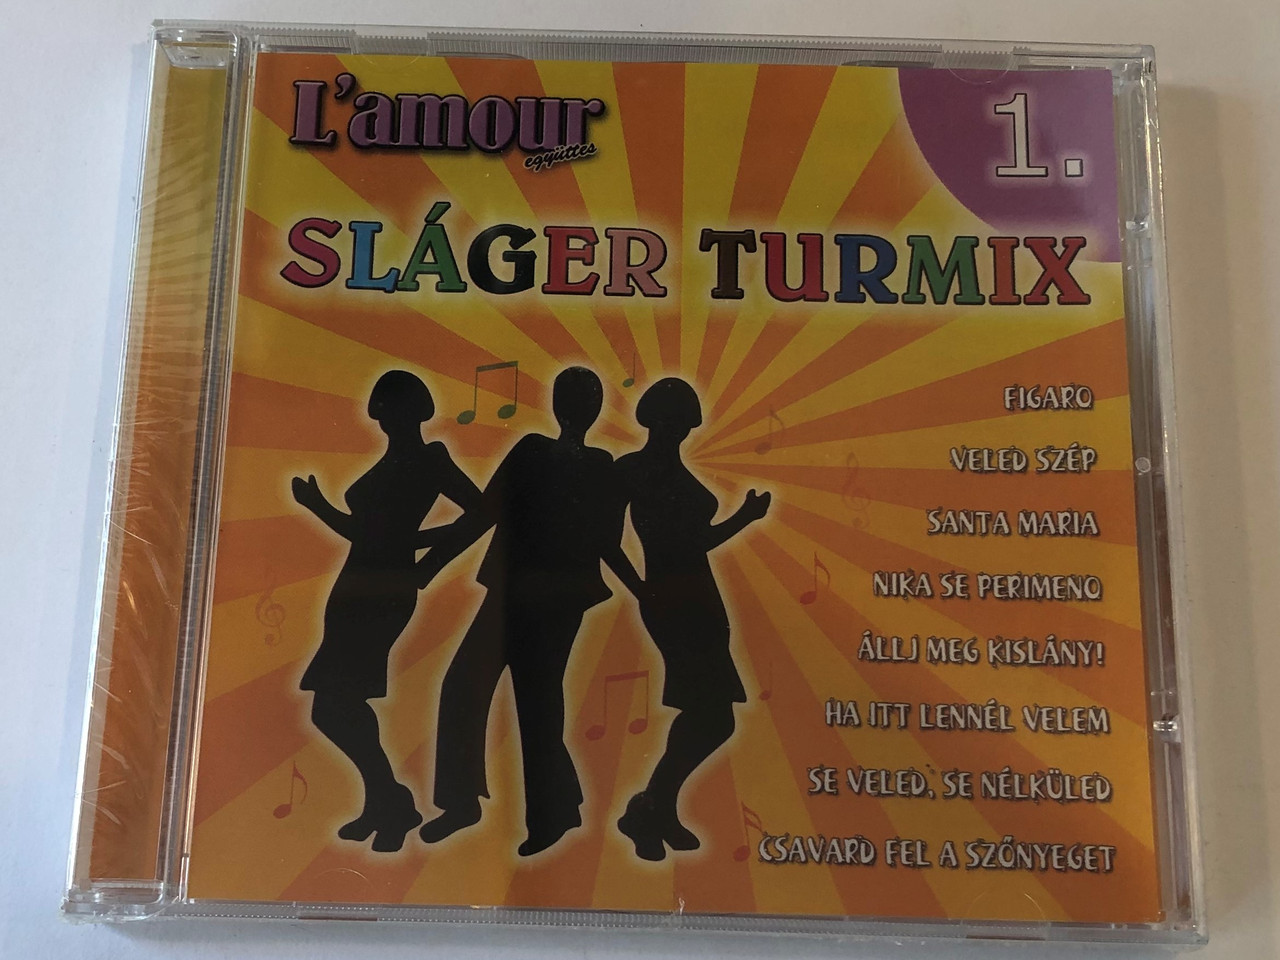 L'amour Együttes - Slager Turmix 1. / Figaro, Veled Szep, Santa Maria, Nika  Se Perimeno, Allj Meg